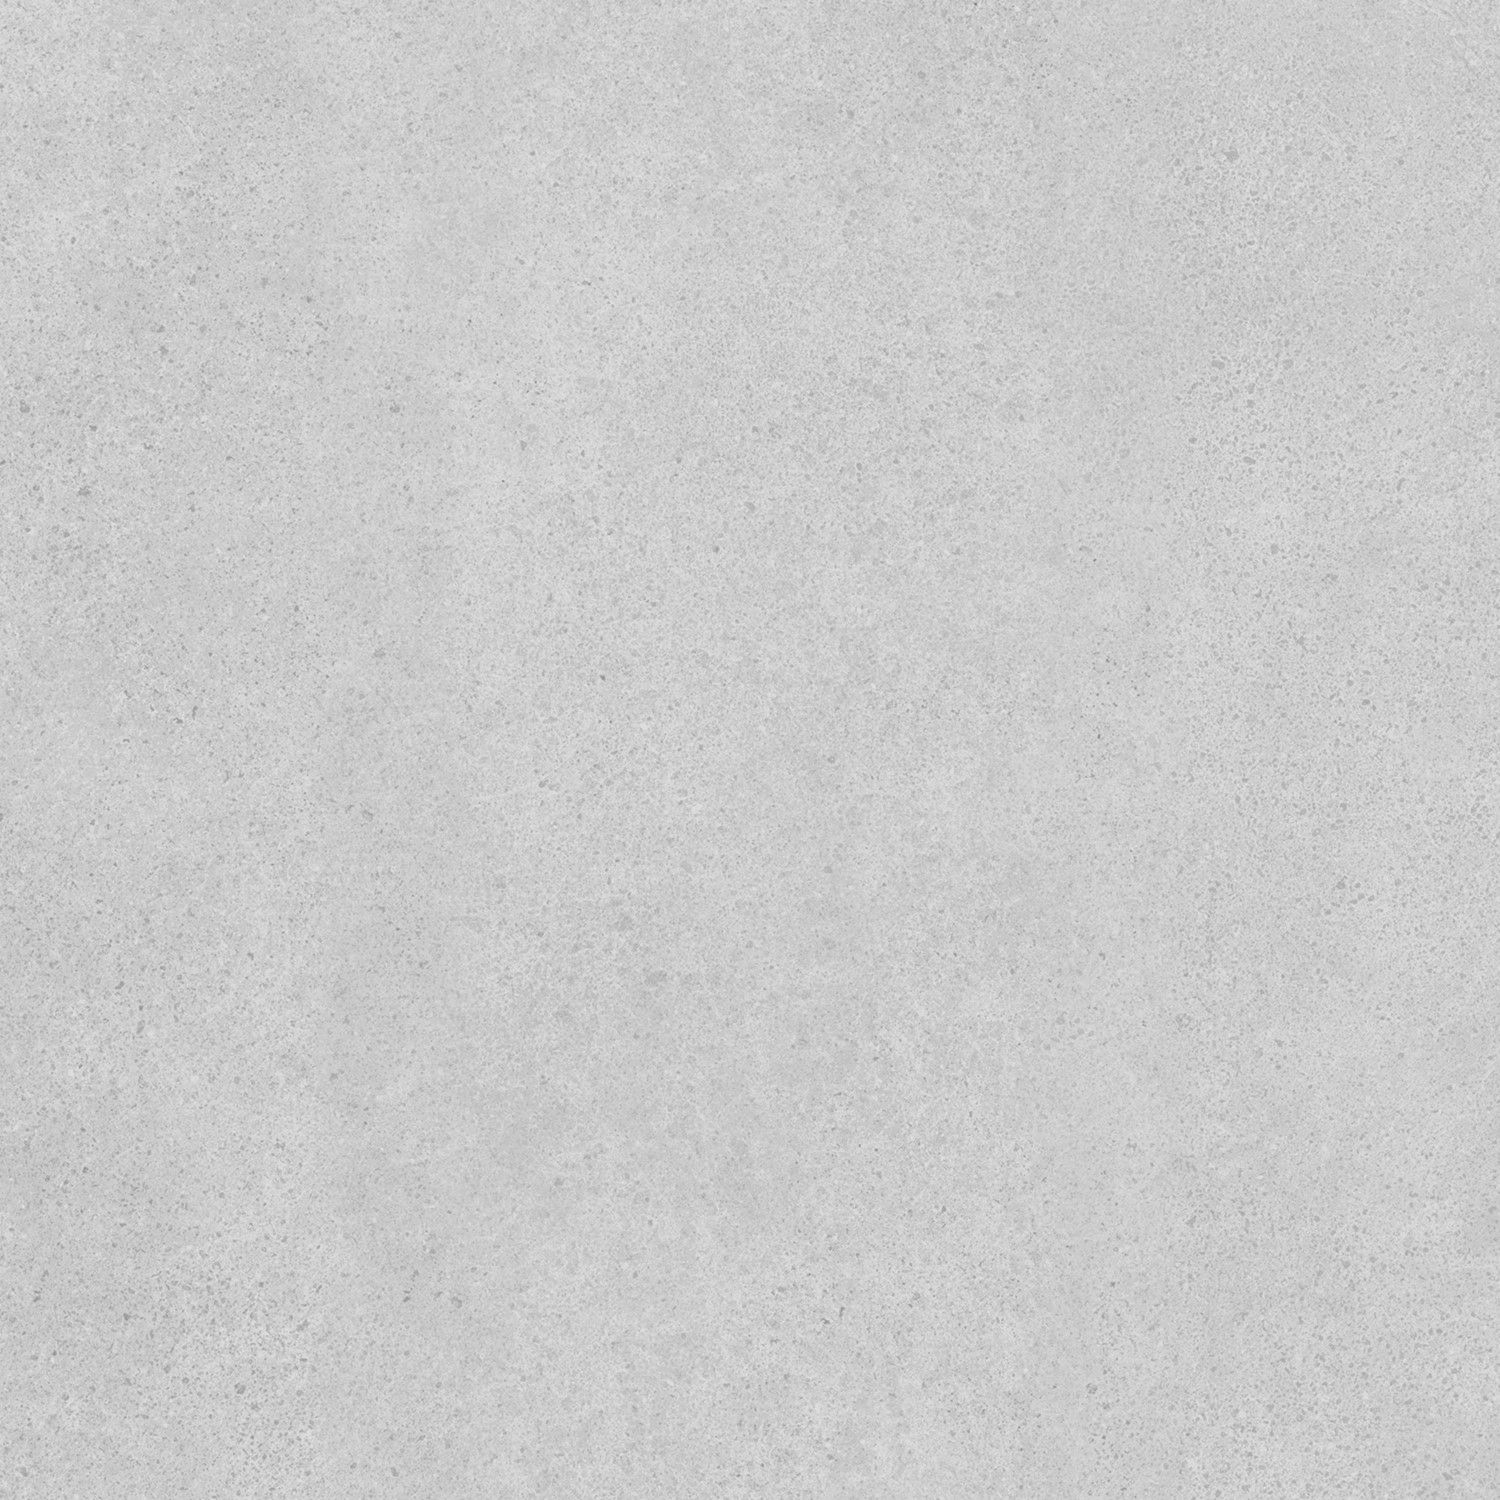 Плитка Kerama Marazzi Milano Безана SG457900R серый светлый обрезной 50,2x50,2x0,95 см плитка kerama marazzi milano безана sg457900r серый светлый обрезной 50 2x50 2x0 95 см